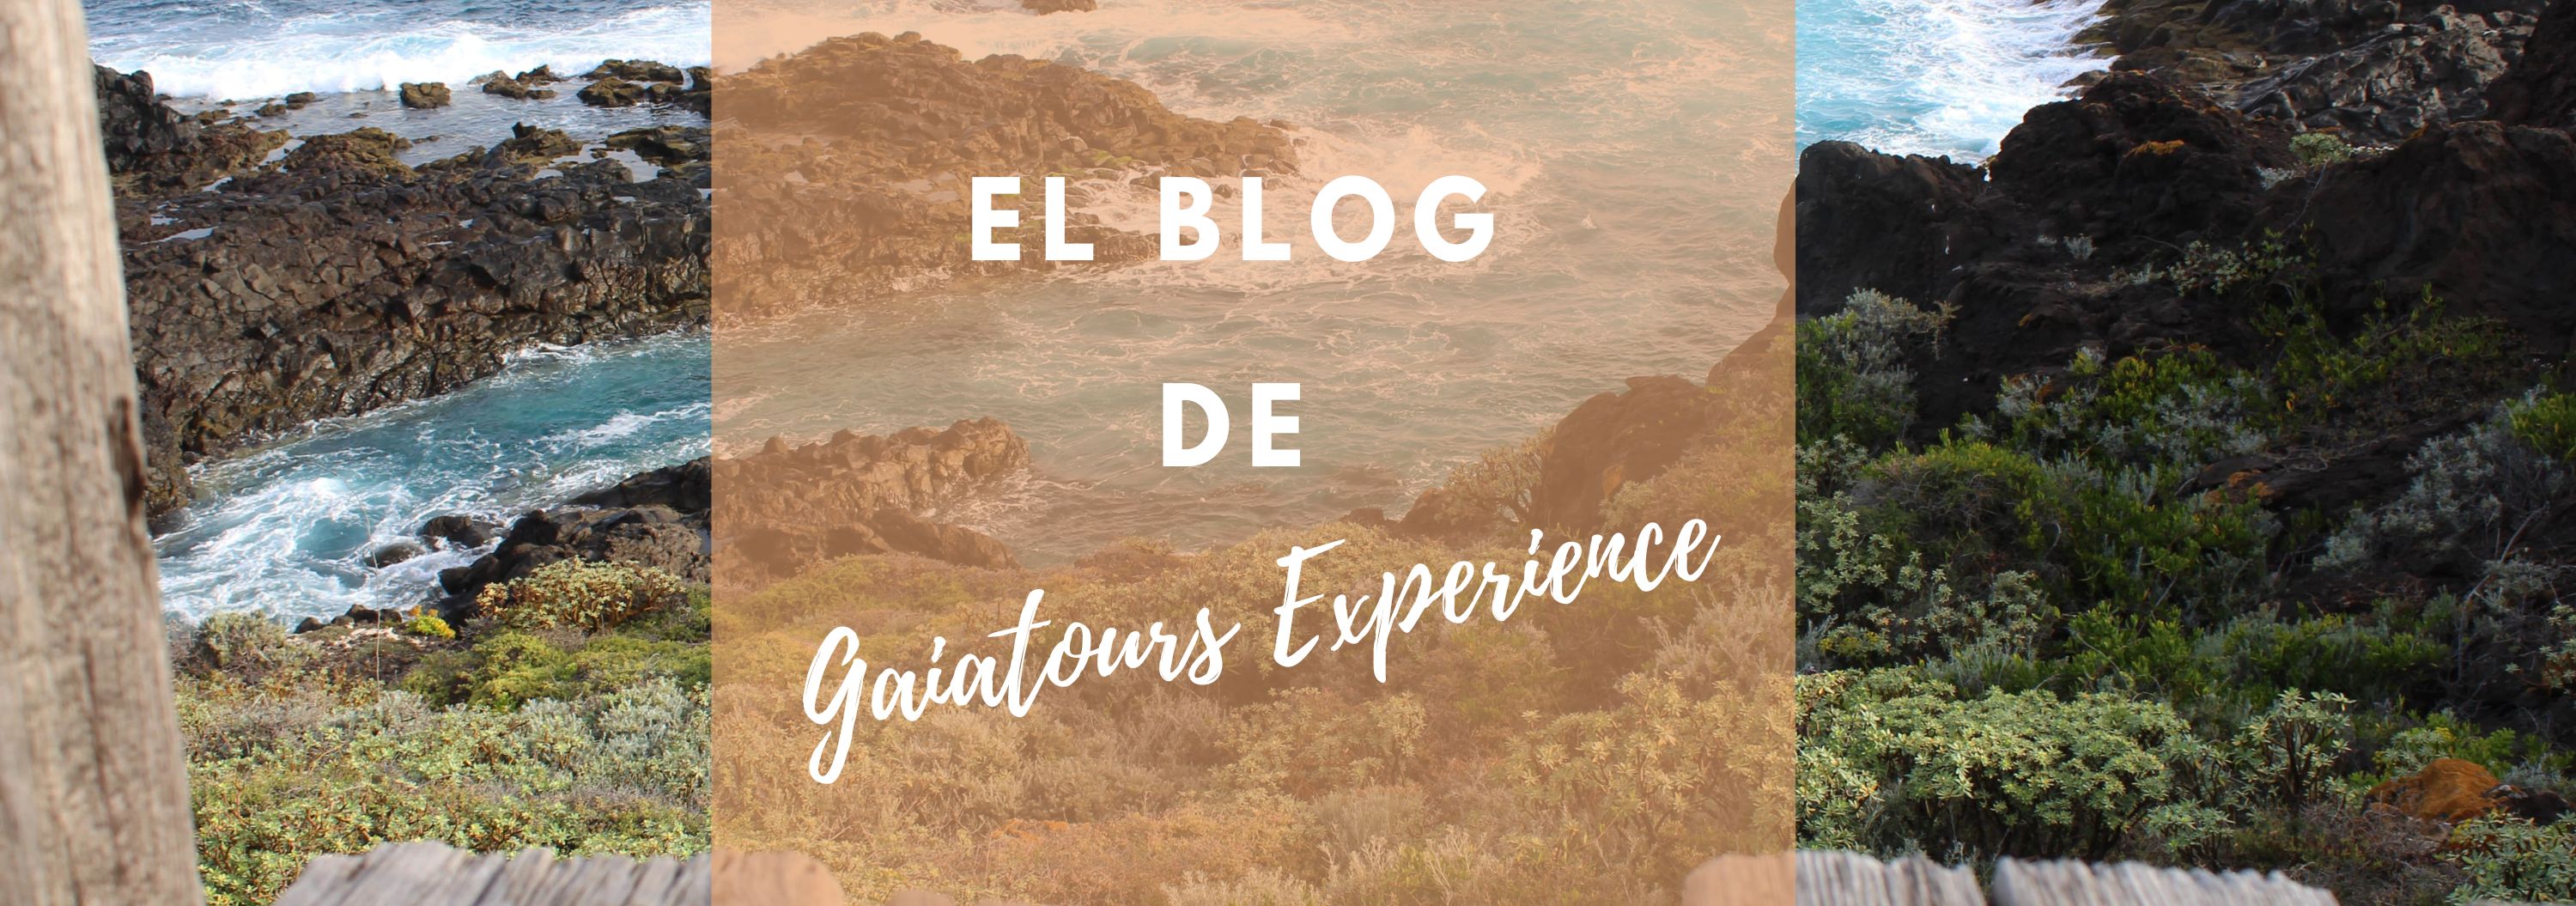 El Blog de Gaiatours Experience